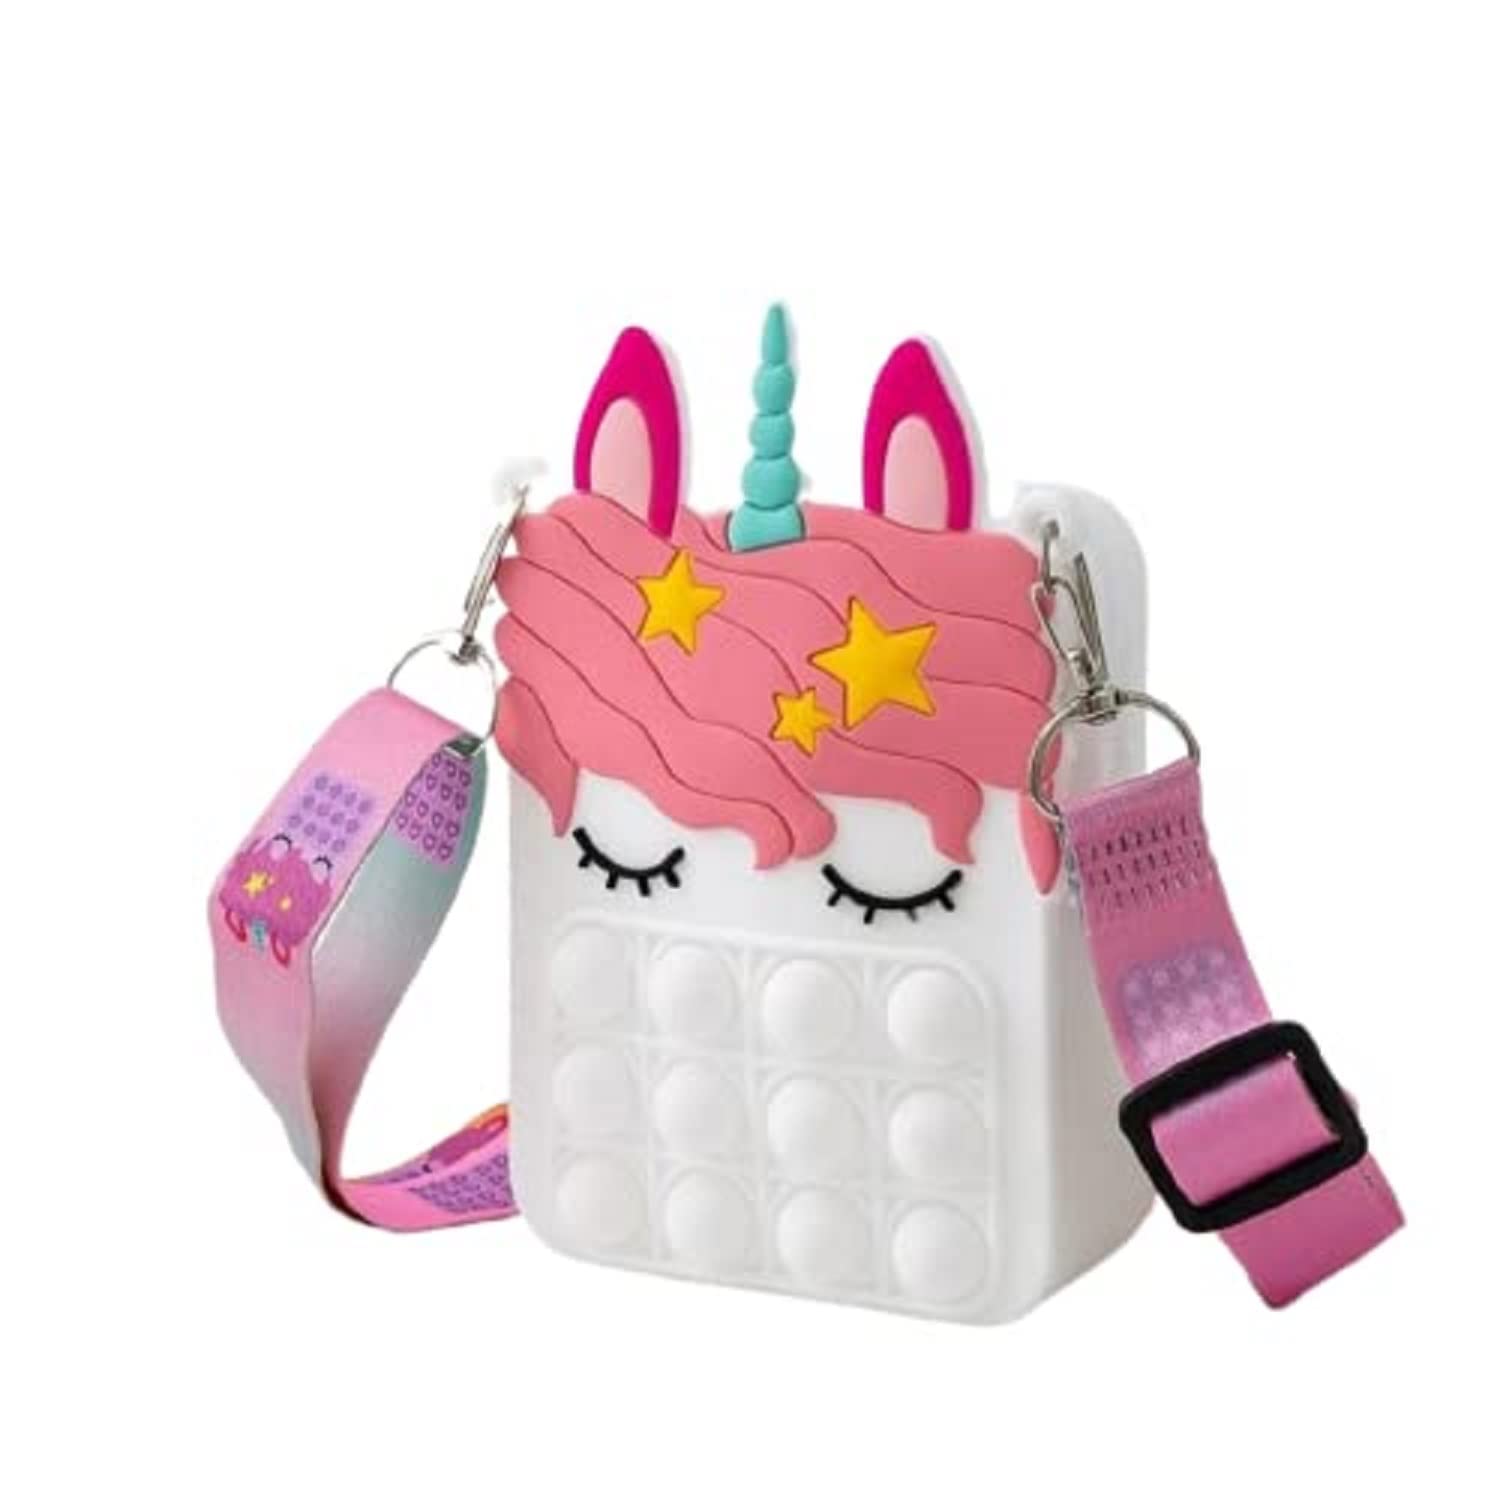 Little Girls Handbag Mini Shoulder Bag Purse Messenger Bag for Kids,Toddler  Girl | eBay